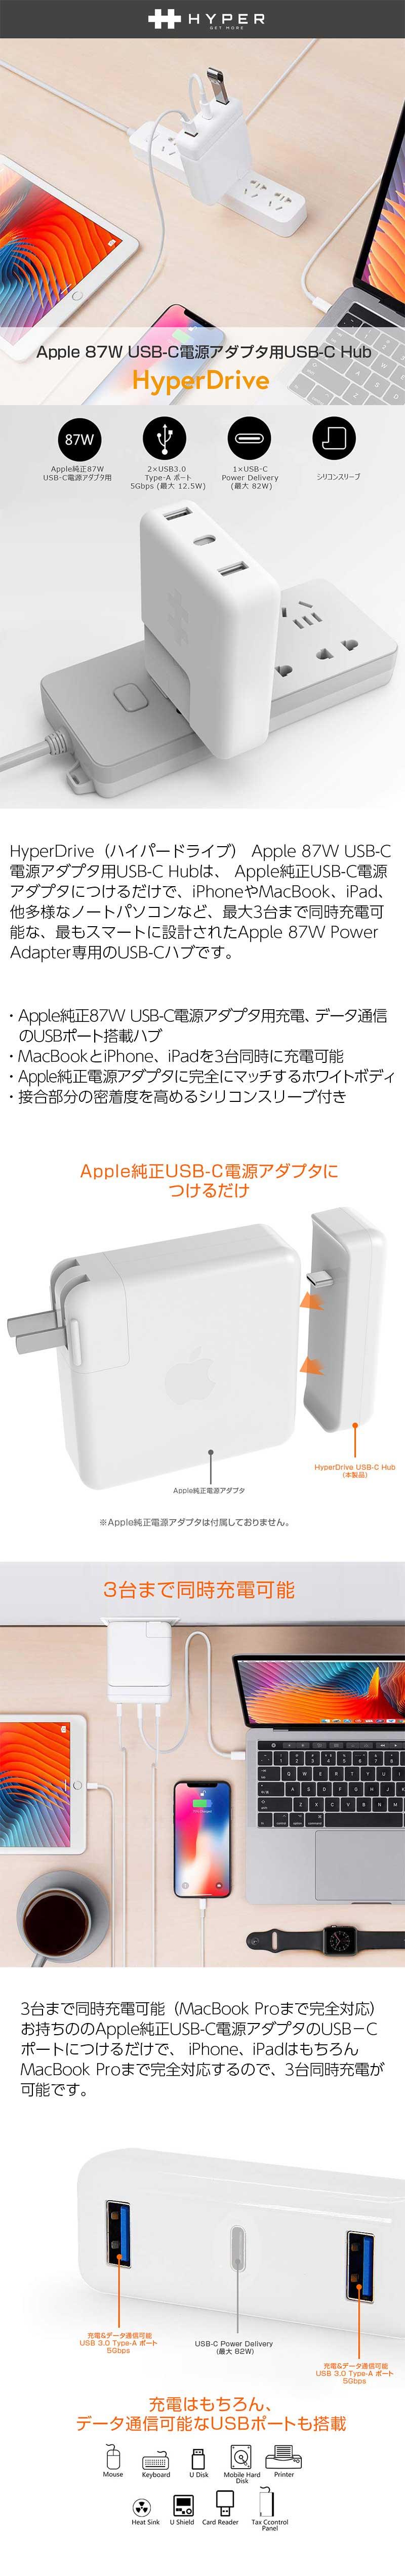 HyperDrive Apple87W USB-C電源アダプタ用USB-C Hub』 Apple 87W Power ...